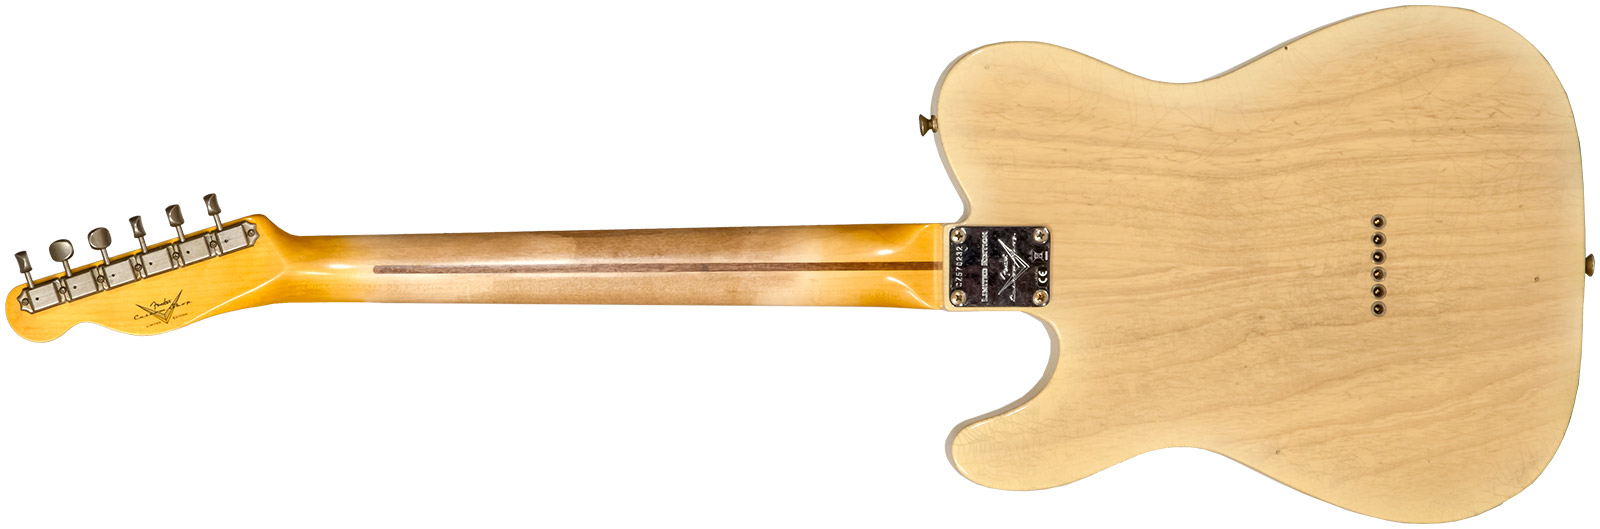 Fender Custom Shop Tele 1955 2s Ht Mn #cz570232 - Journeyman Relic Natural Blonde - E-Gitarre in Teleform - Variation 1